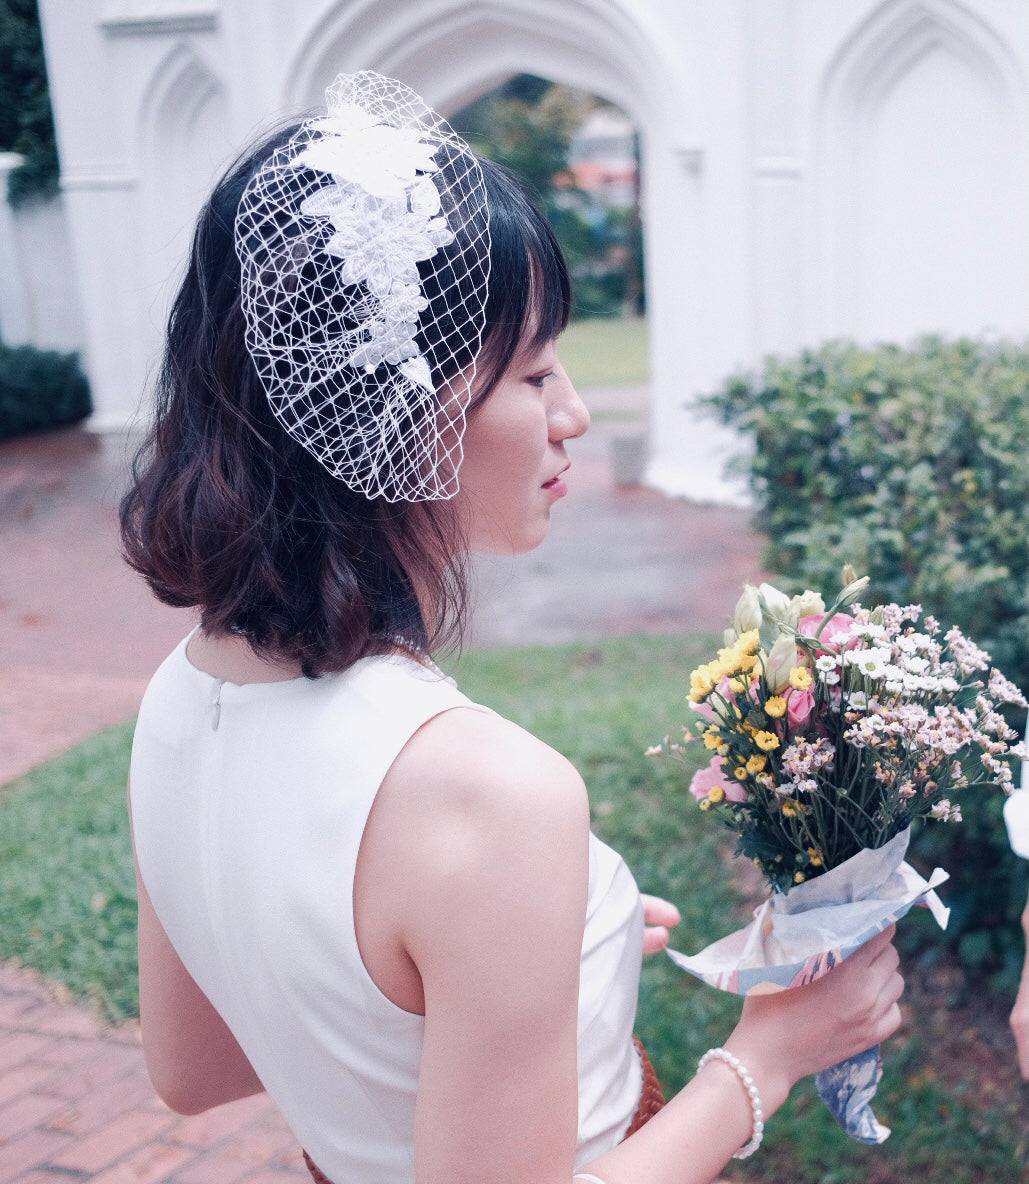 Custom order of bridal birdcage veil headband for Zoe in Singapore